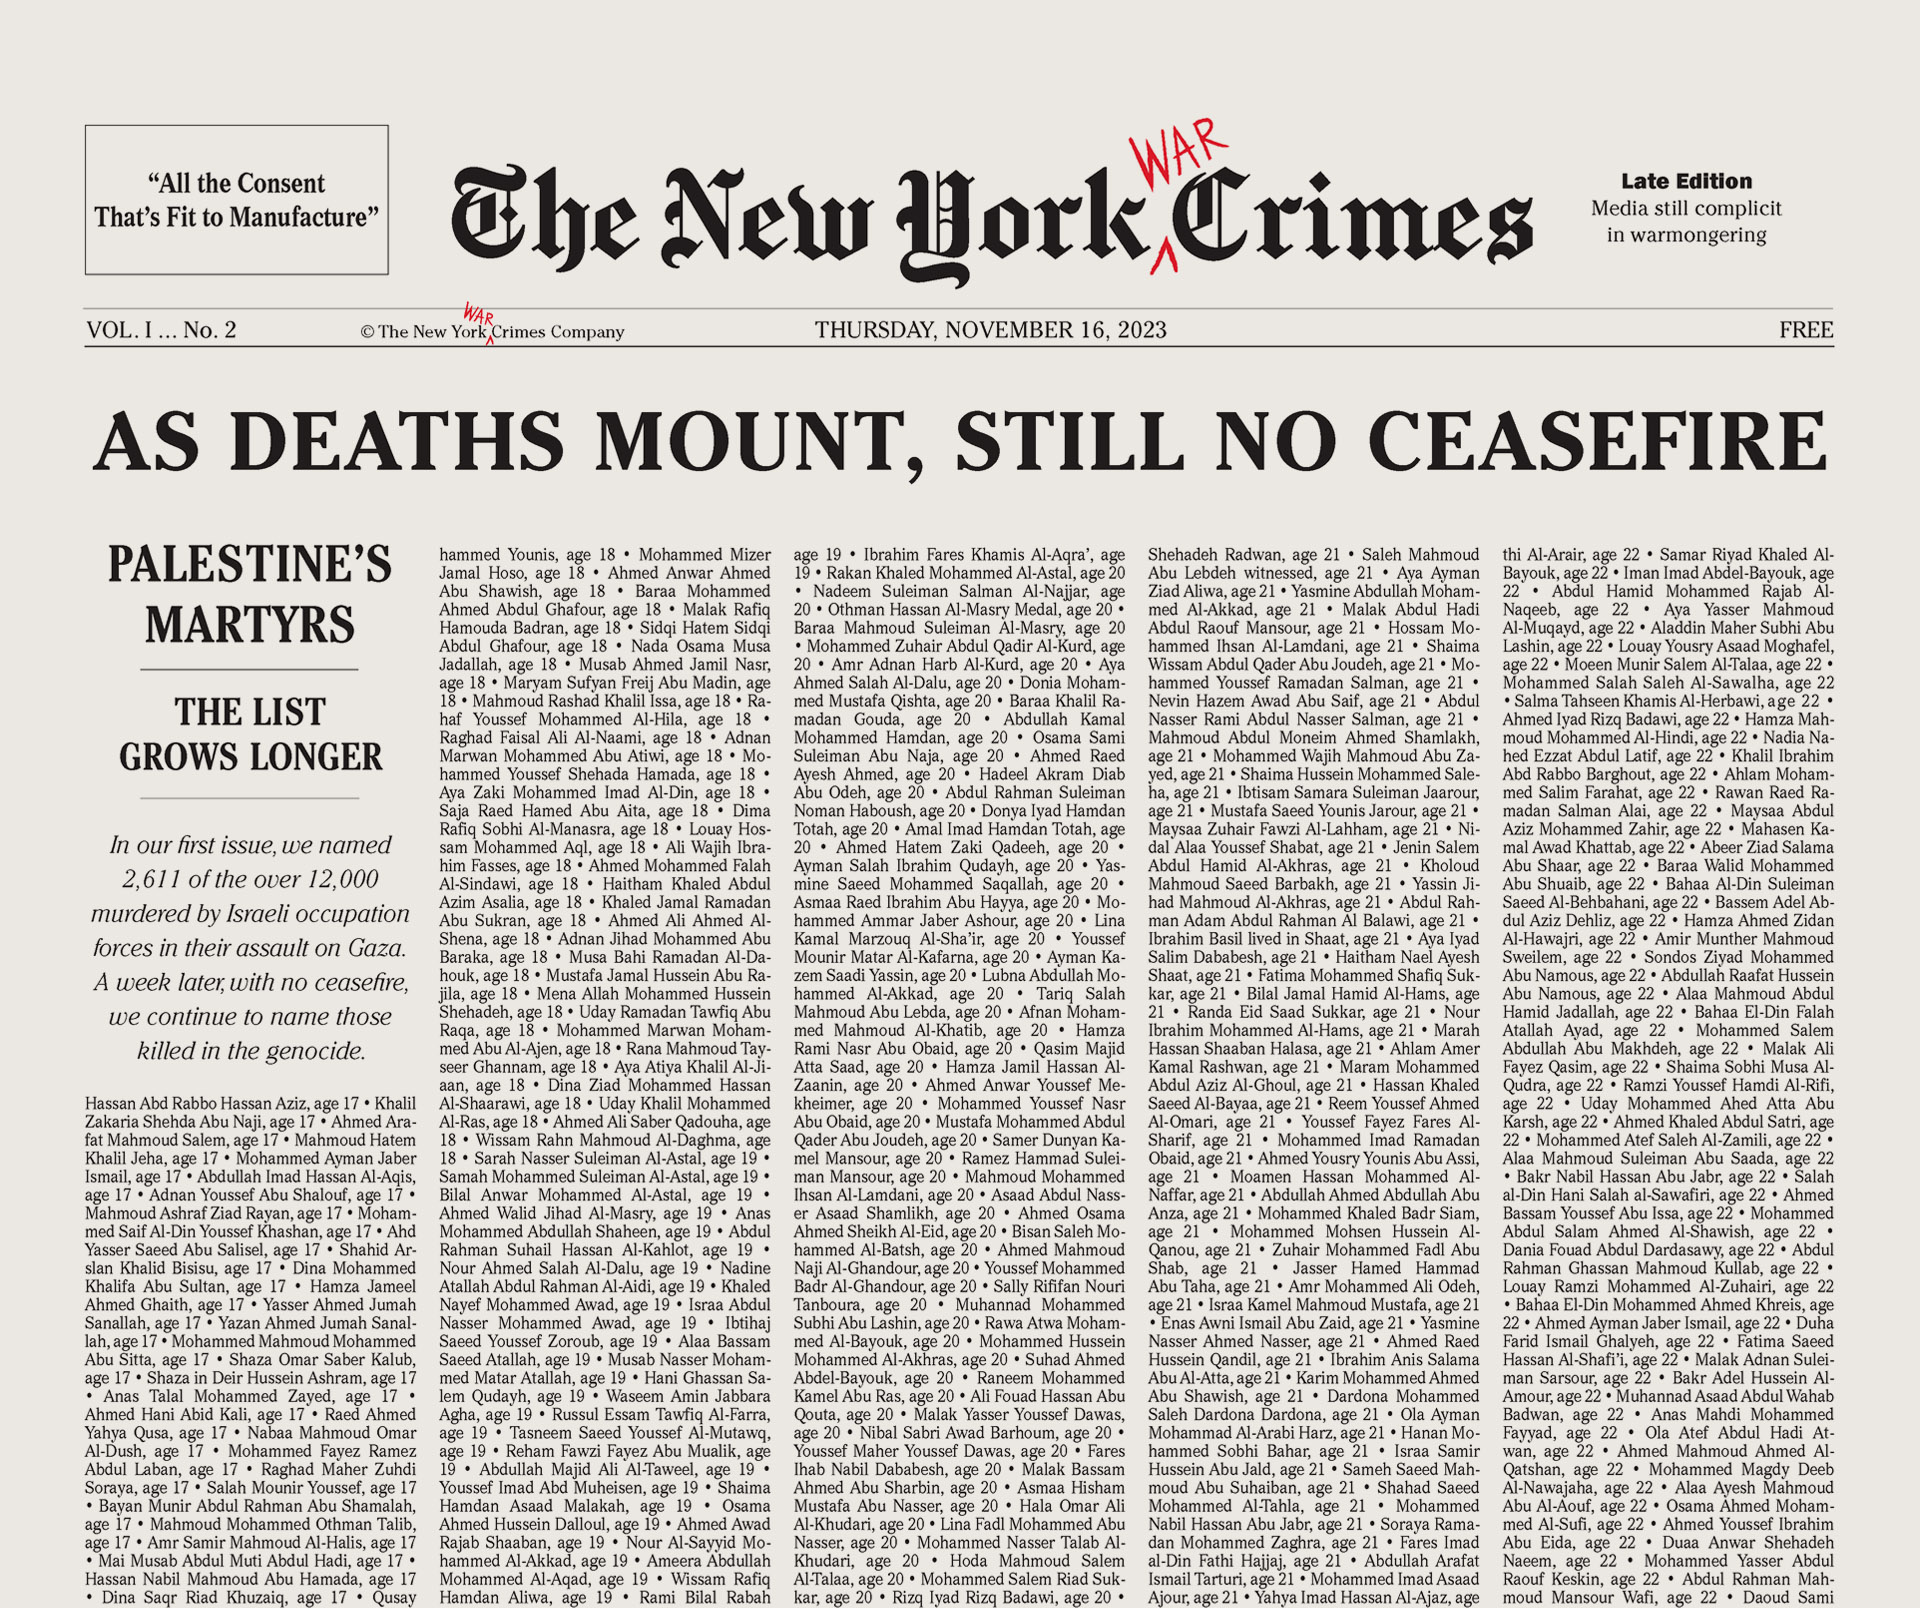 https://newyorkwarcrimes.com/media/pages/print-issue-vol-i-no-2-as-death-mounts-still-no-ceasefire/2c28aaf61e-1708981499/ny-crimes-02-cover.jpg